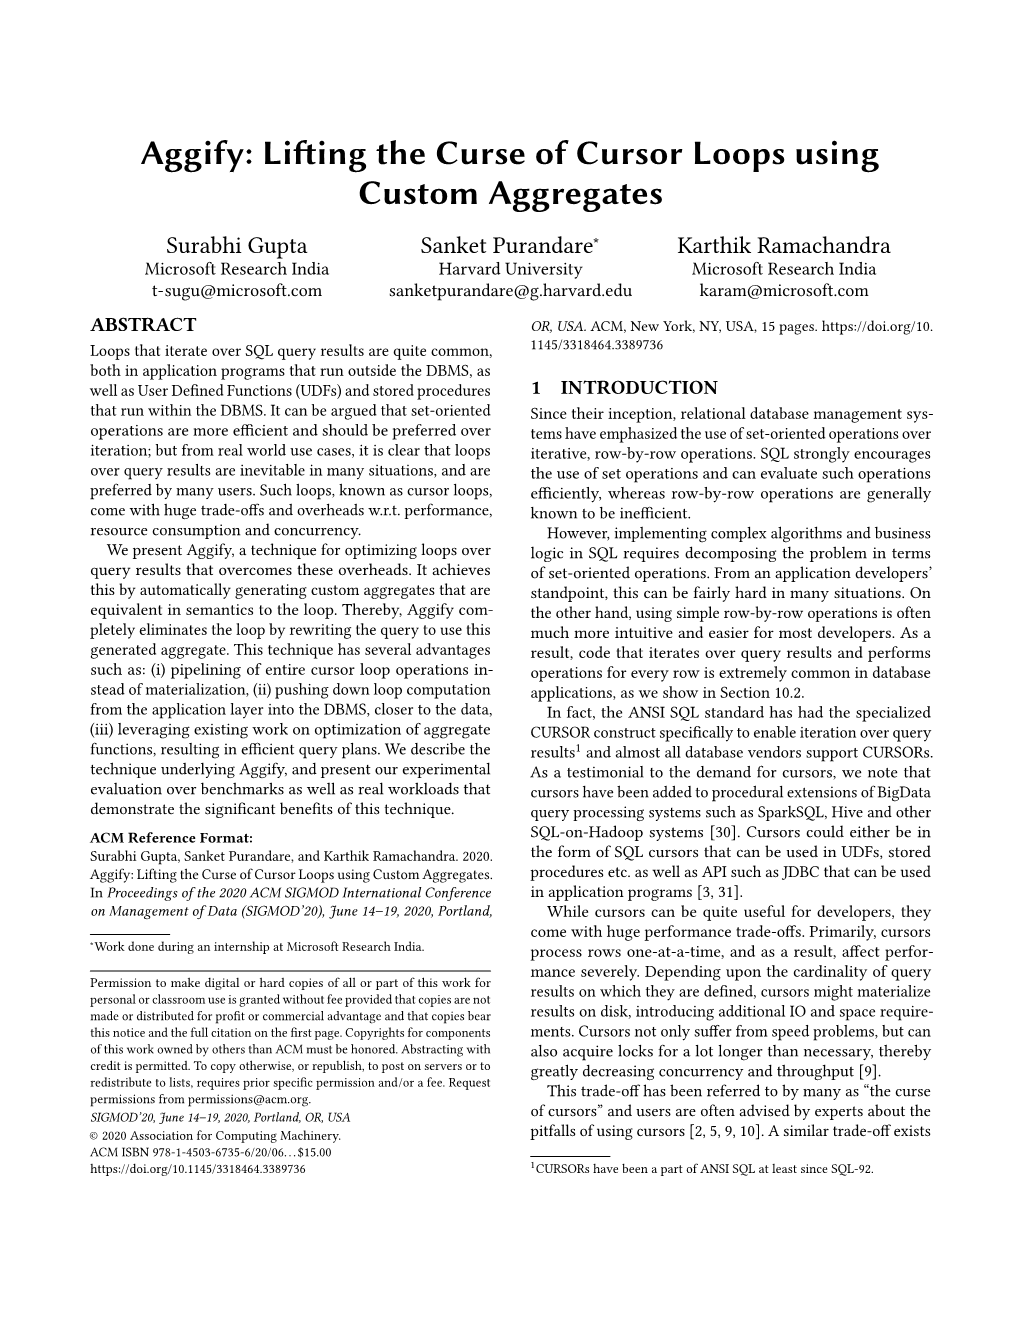 Aggify: Lifting the Curse of Cursor Loops Using Custom Aggregates